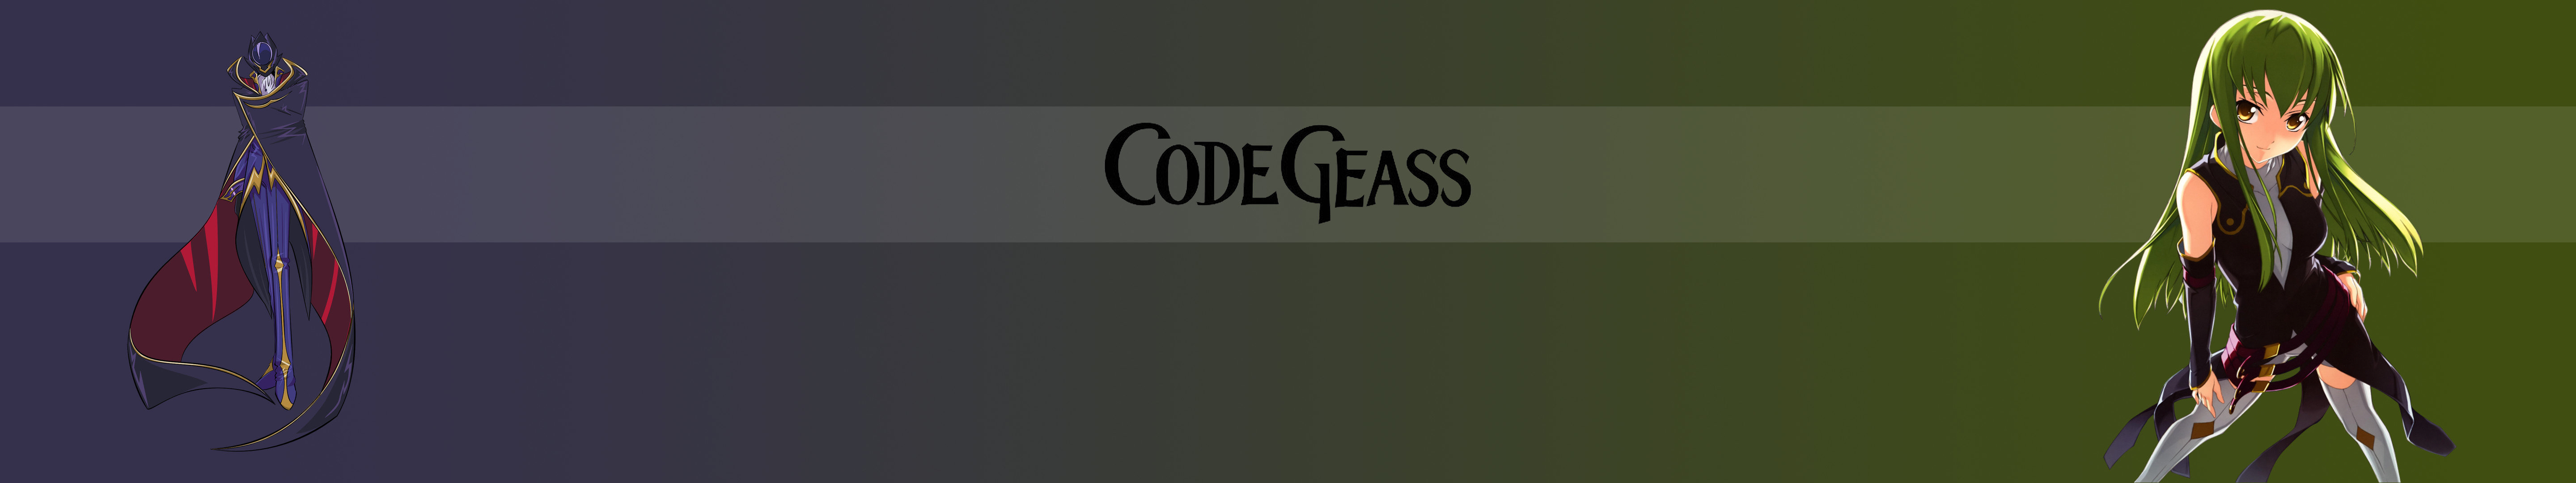 Free download Code Geass wallpaper ID:44213 triple screen 5760x1080 for desktop